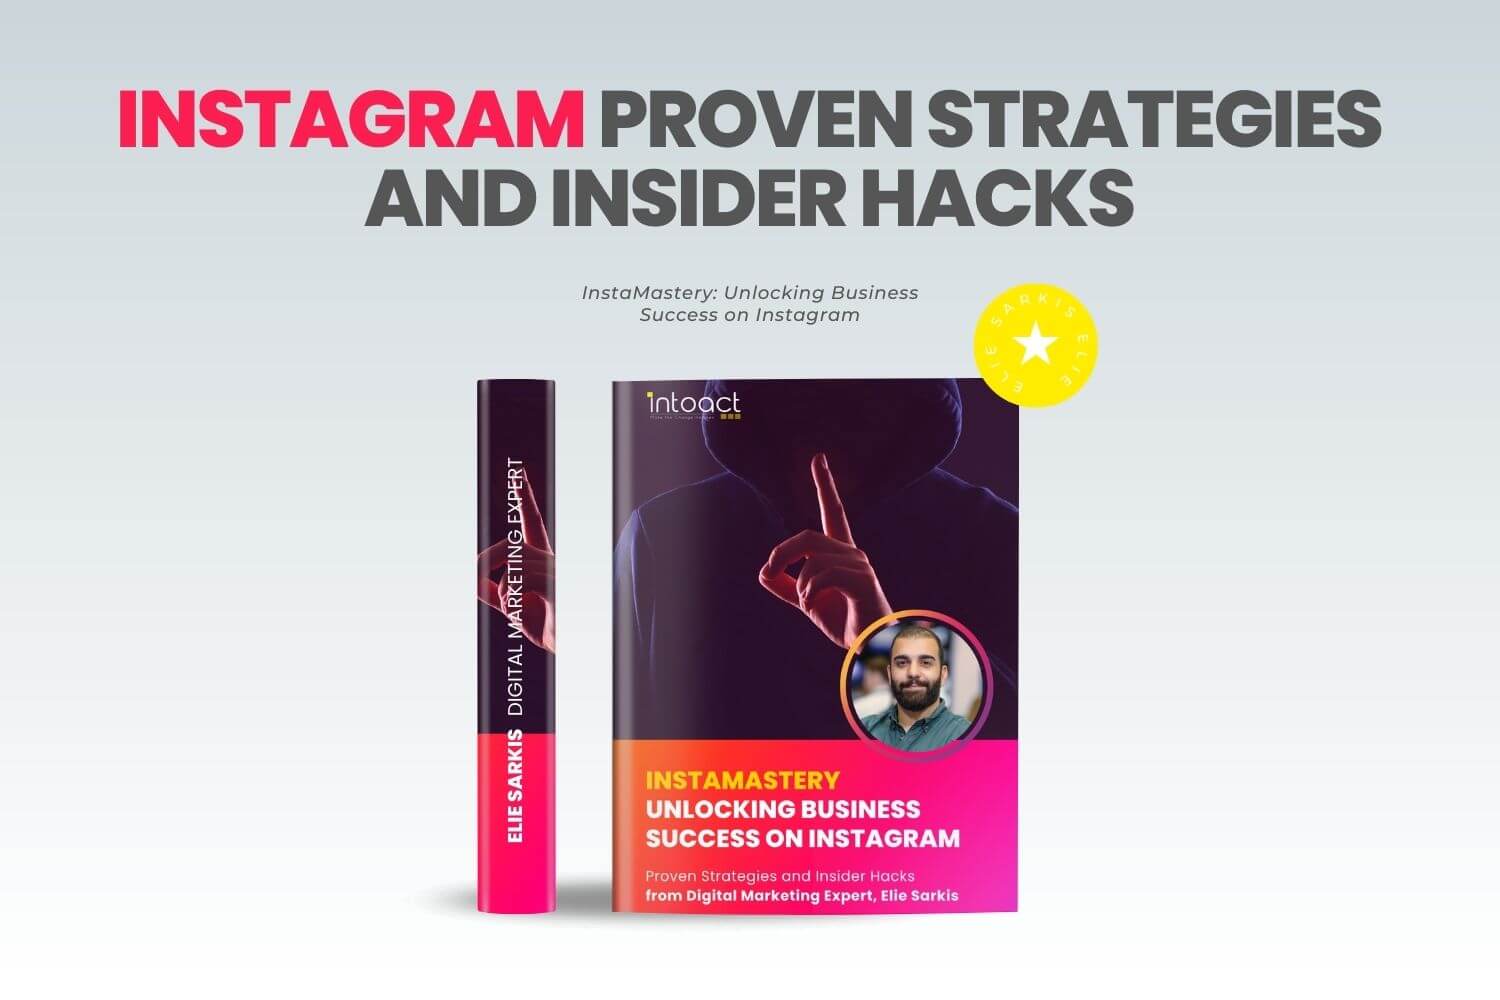 InstaMastery - Unlocking Business Success on Instagram